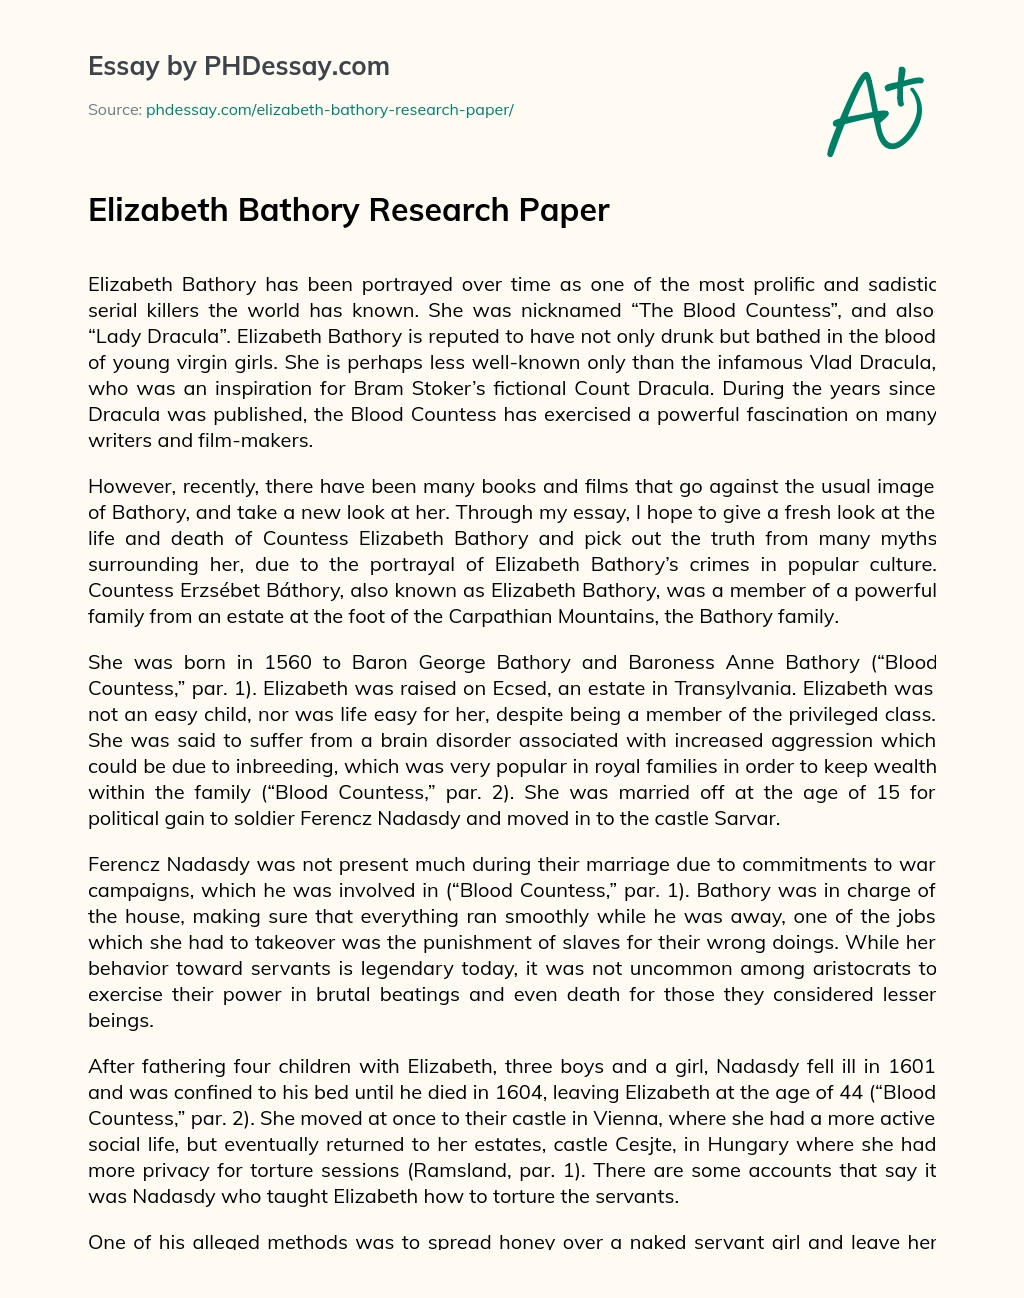 Elizabeth Bathory Research Paper essay